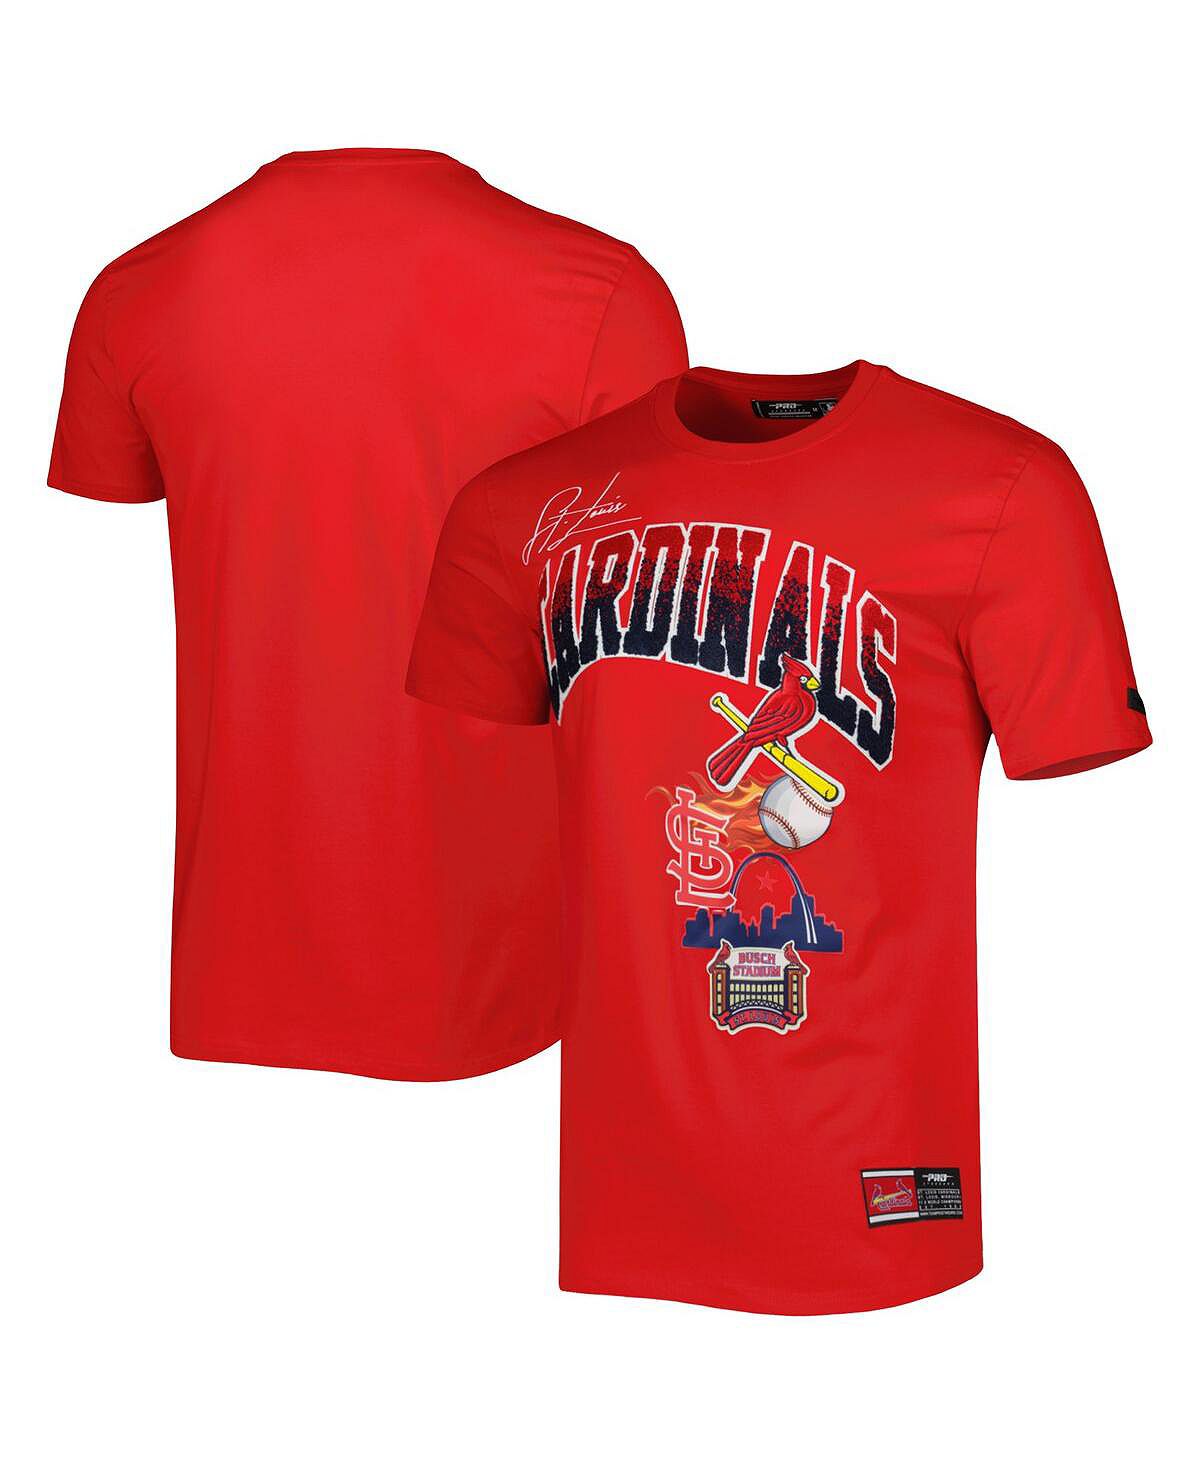 Мужская красная футболка st. louis cardinals hometown Pro Standard, красный